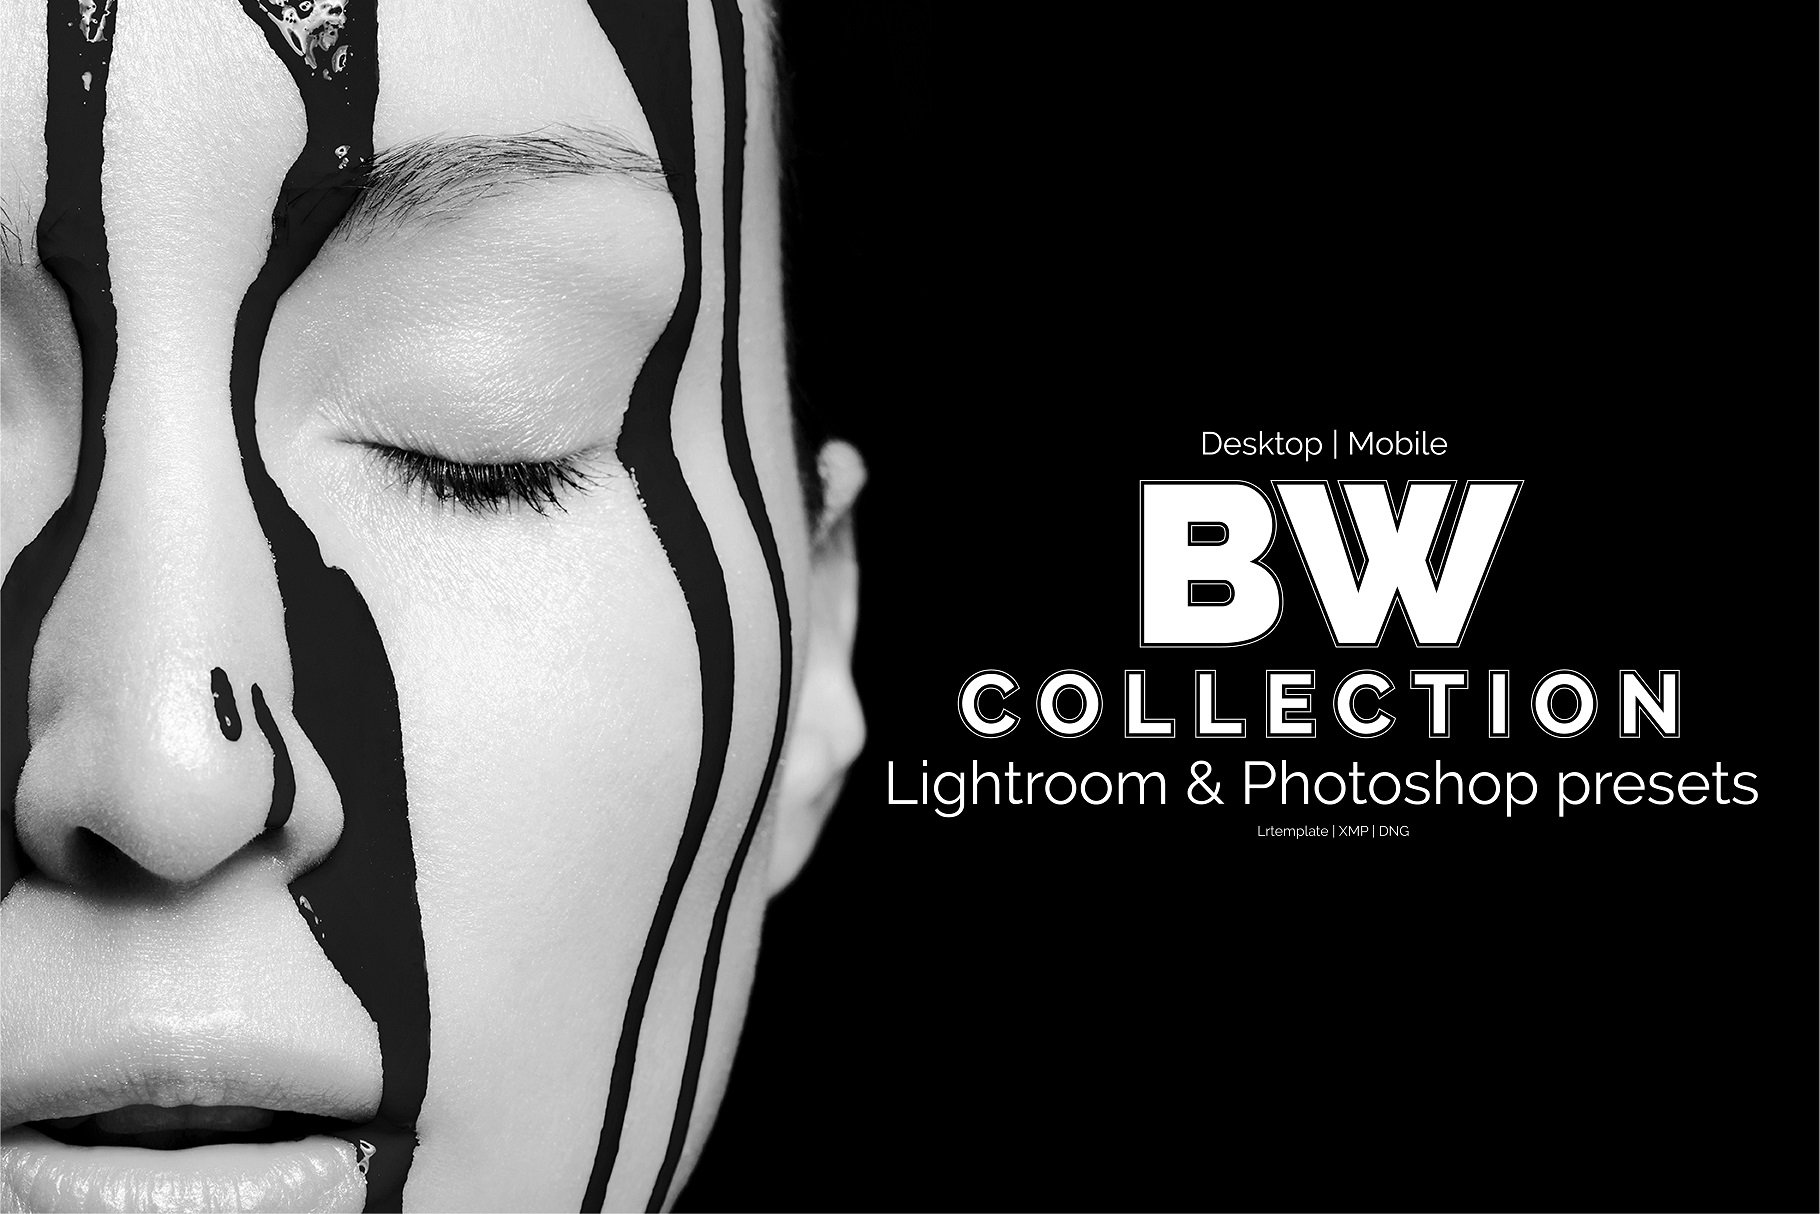 Black & White Lightroom Presetscover image.